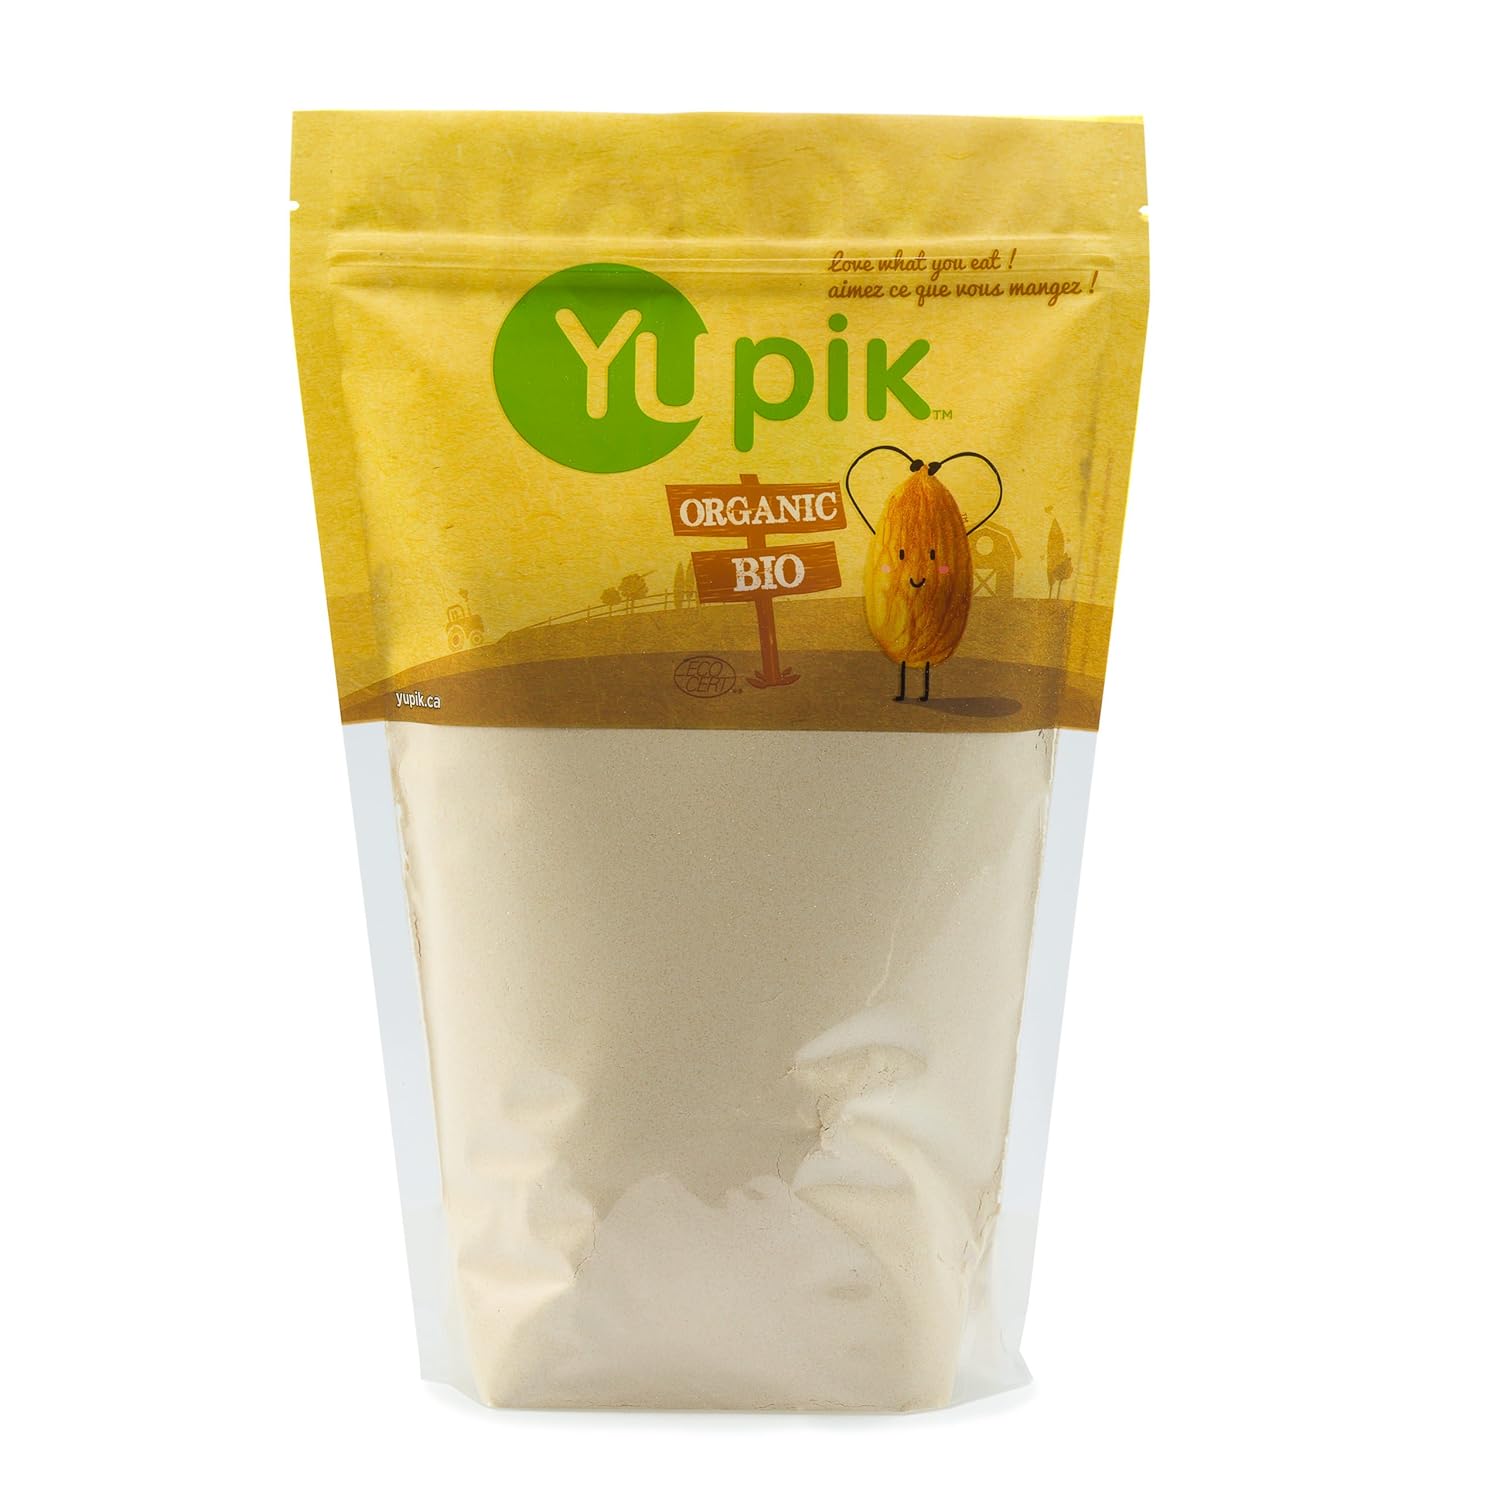 Yupik Organic Amaranth Flour, Gluten-Free, 2.2 lb, 35.2 Oz, Non-GMO, Vegan, Pack of 1